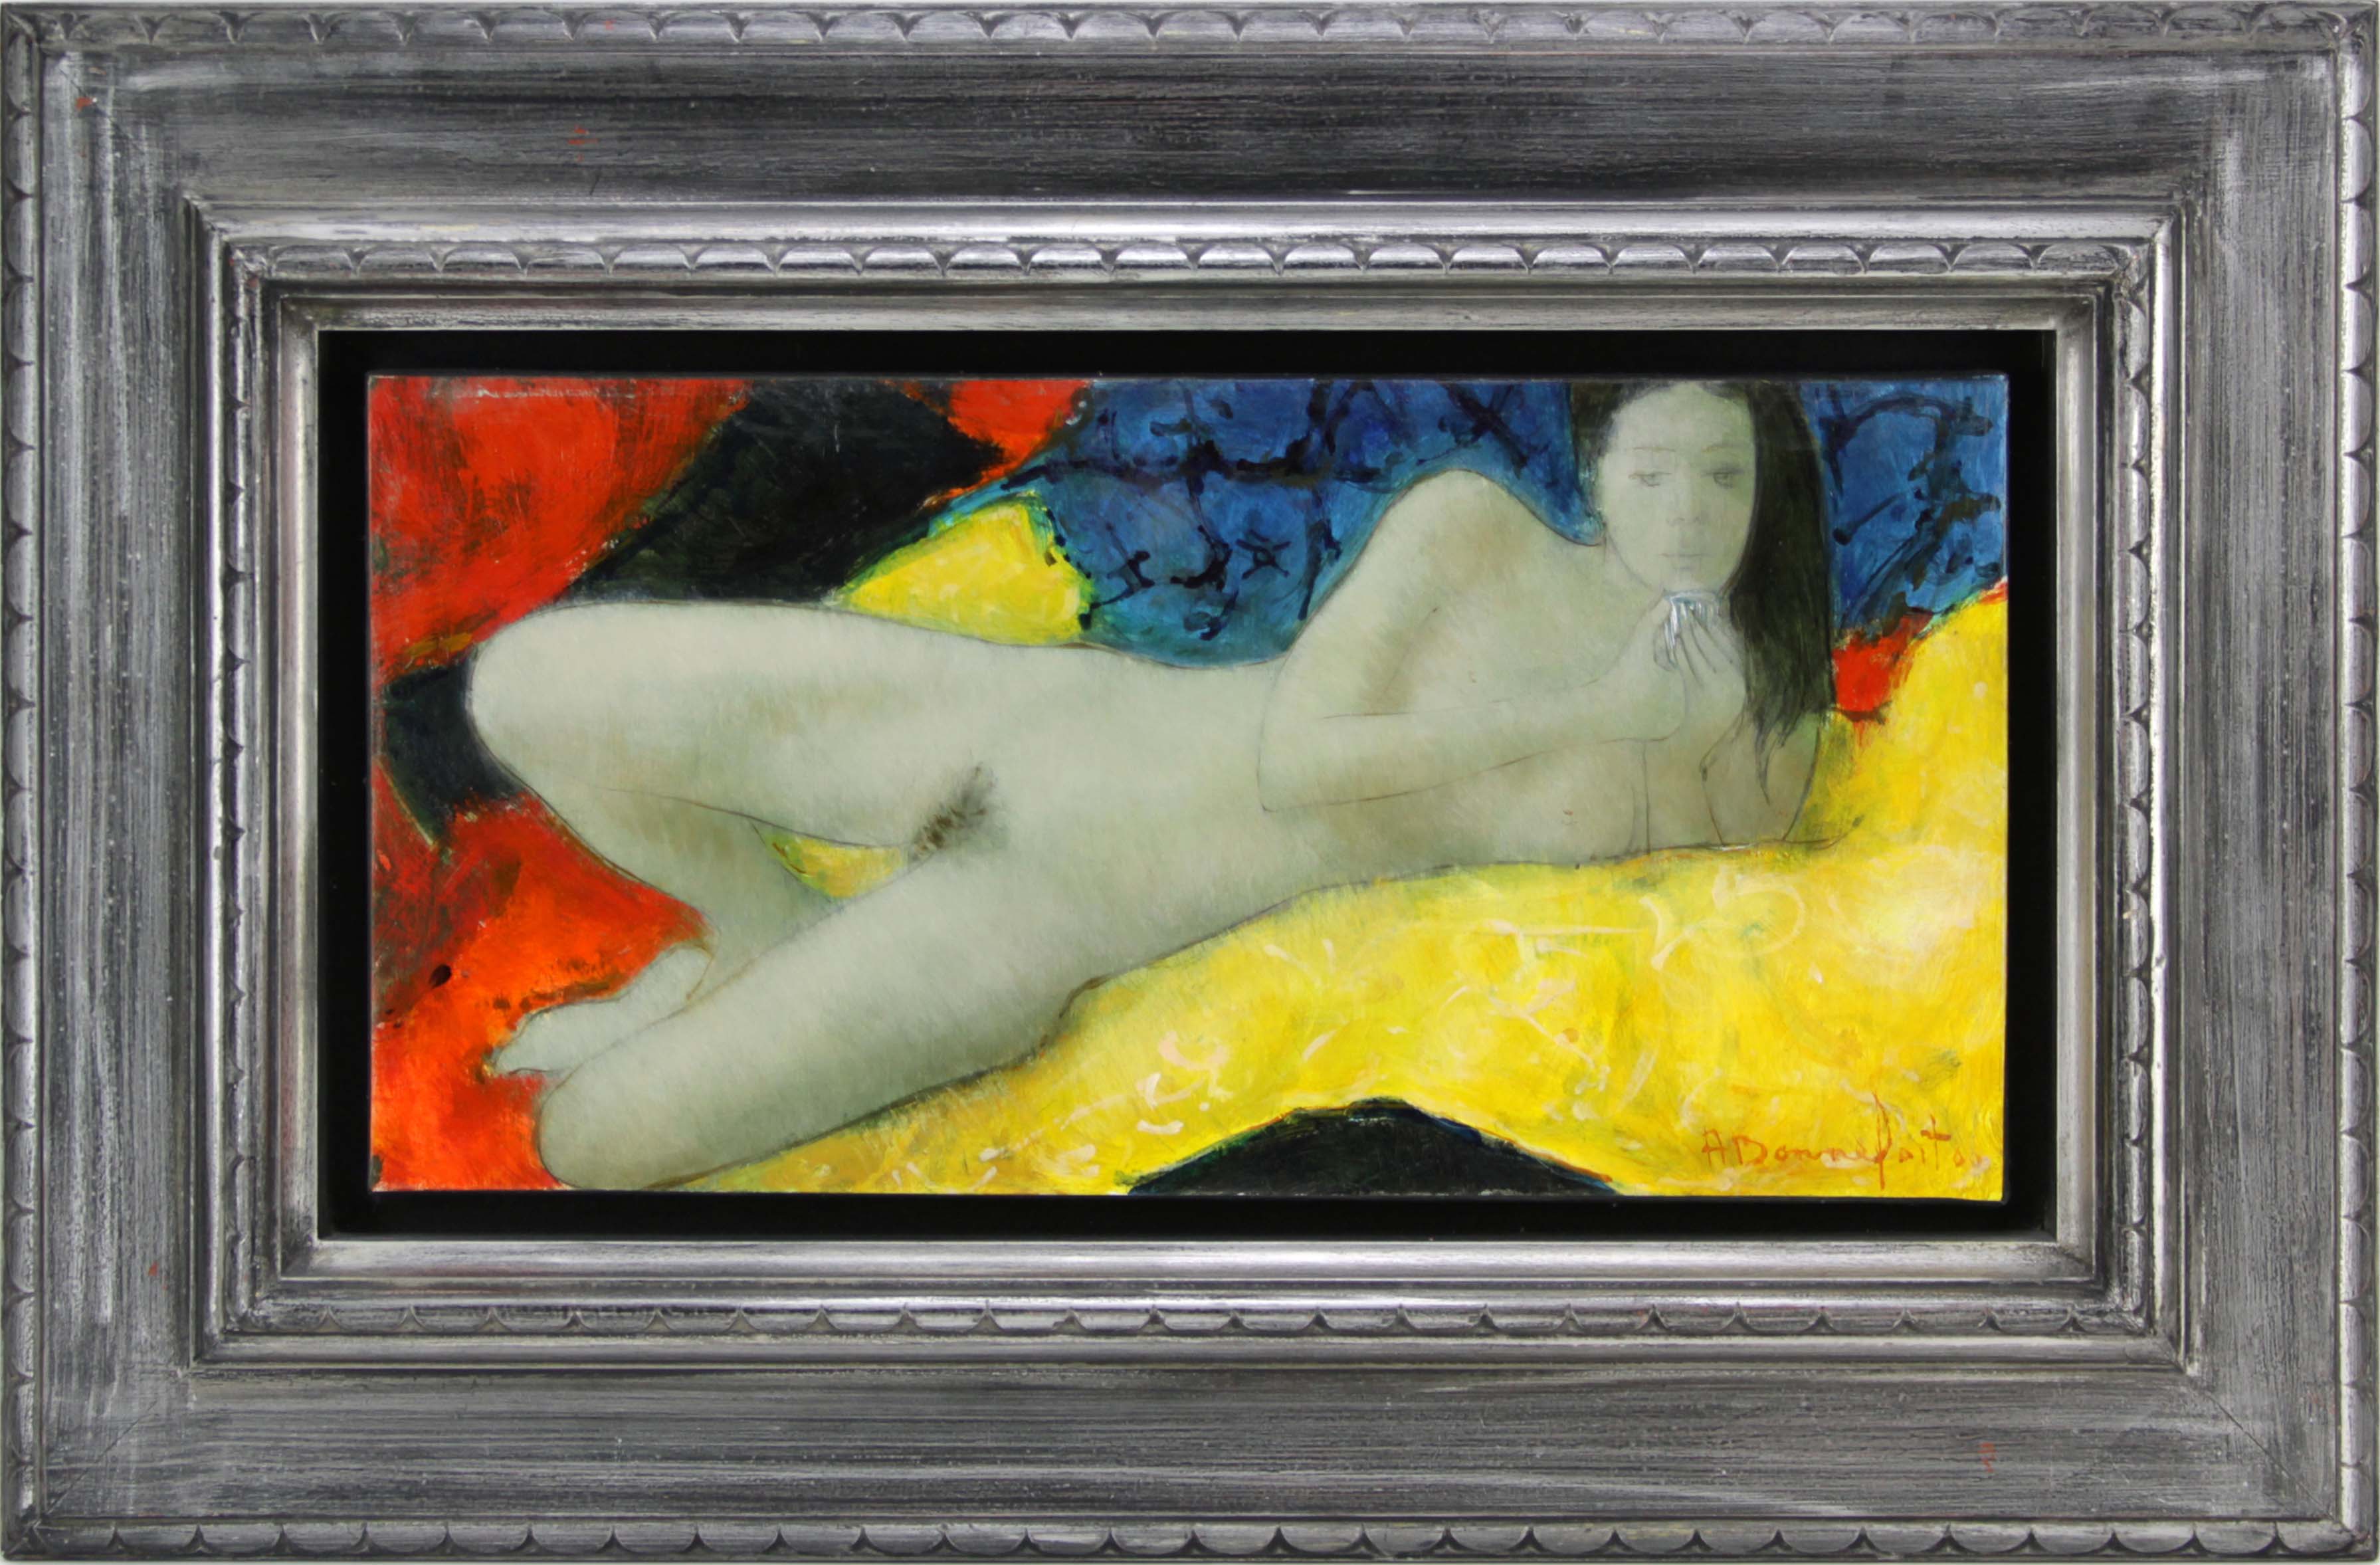 Alain Bonnefoit, French (born 1937) Oil on Canvas, "Tranquilite"